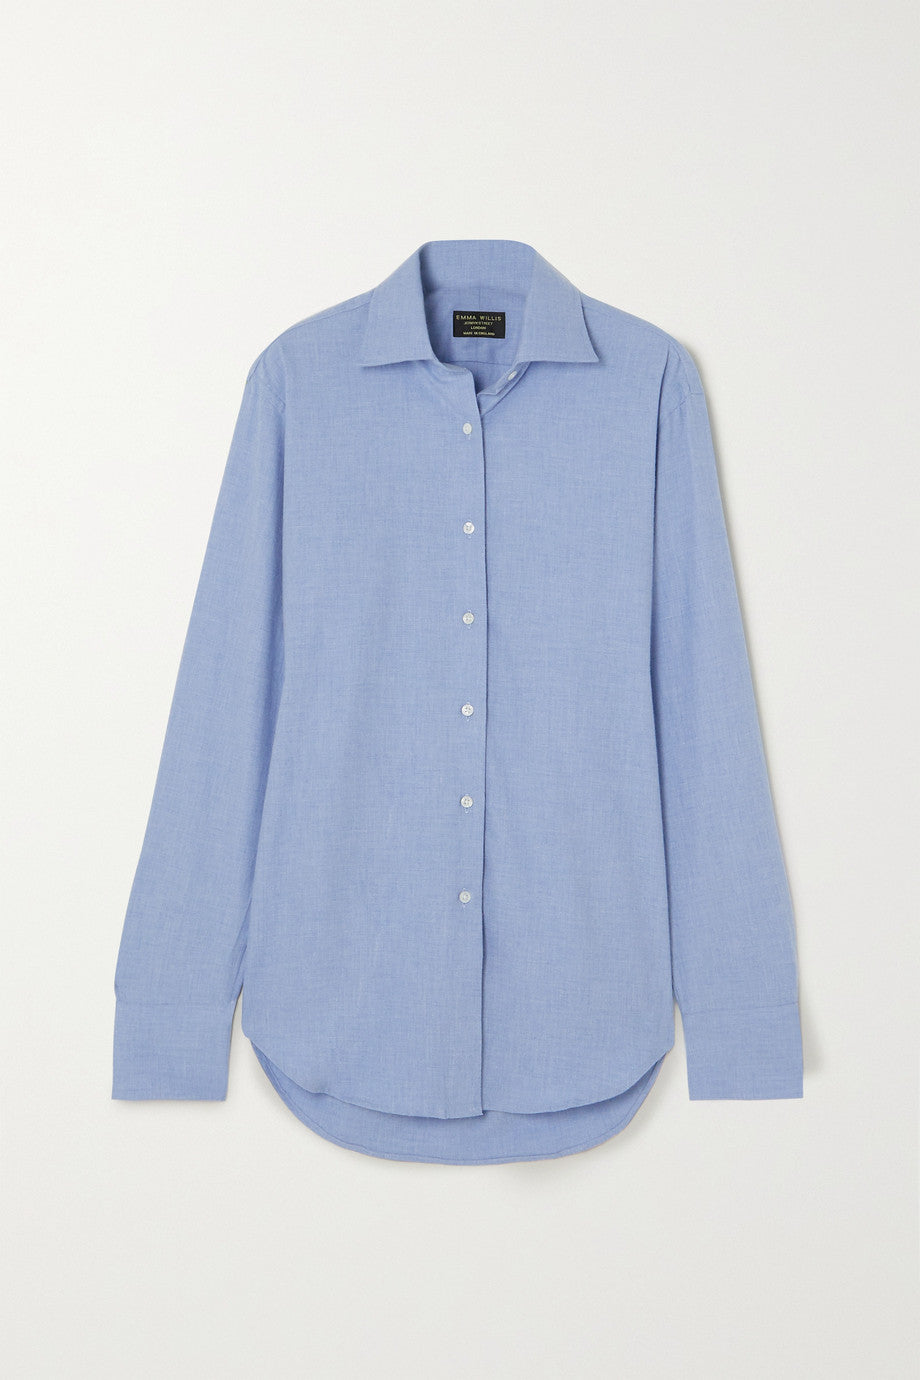 Emma Willis + Net Sustain Houndstooth Brushed-cotton Shirt